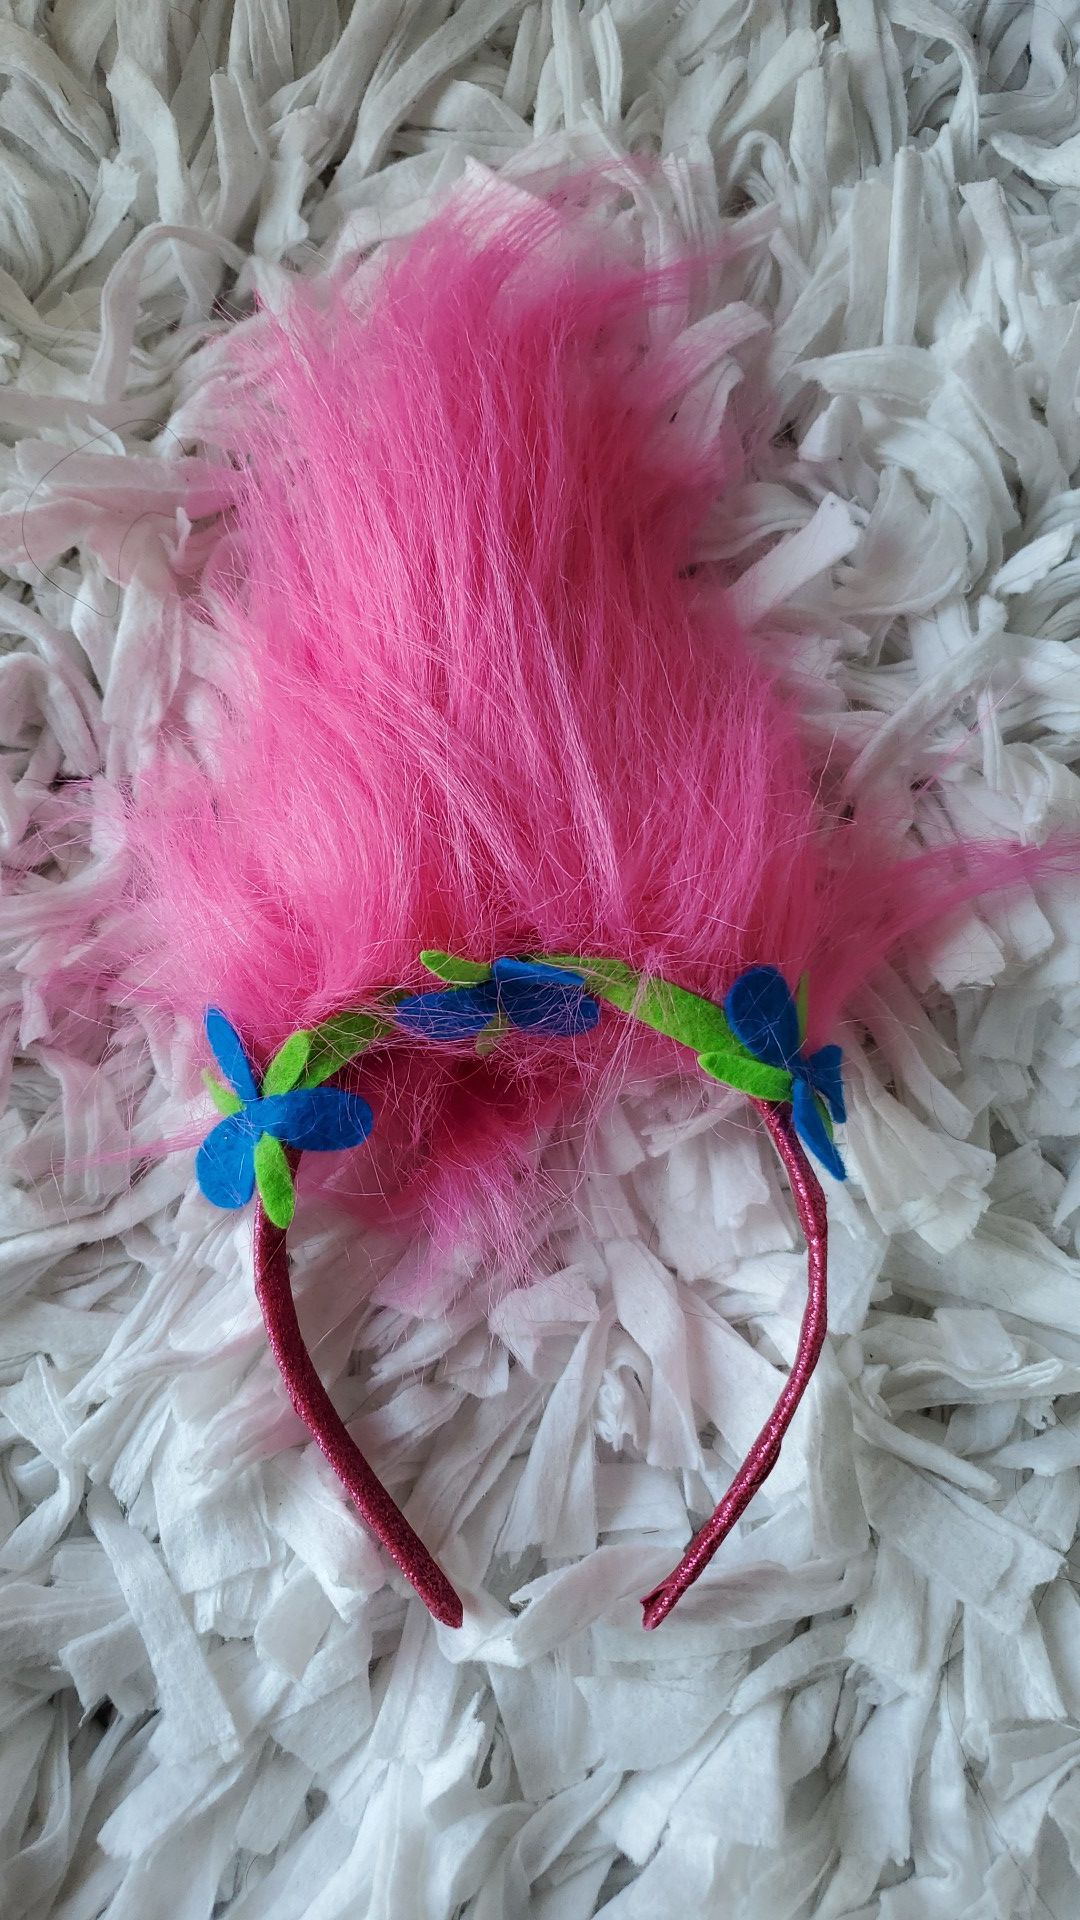 Trolls Princess Poppy headband